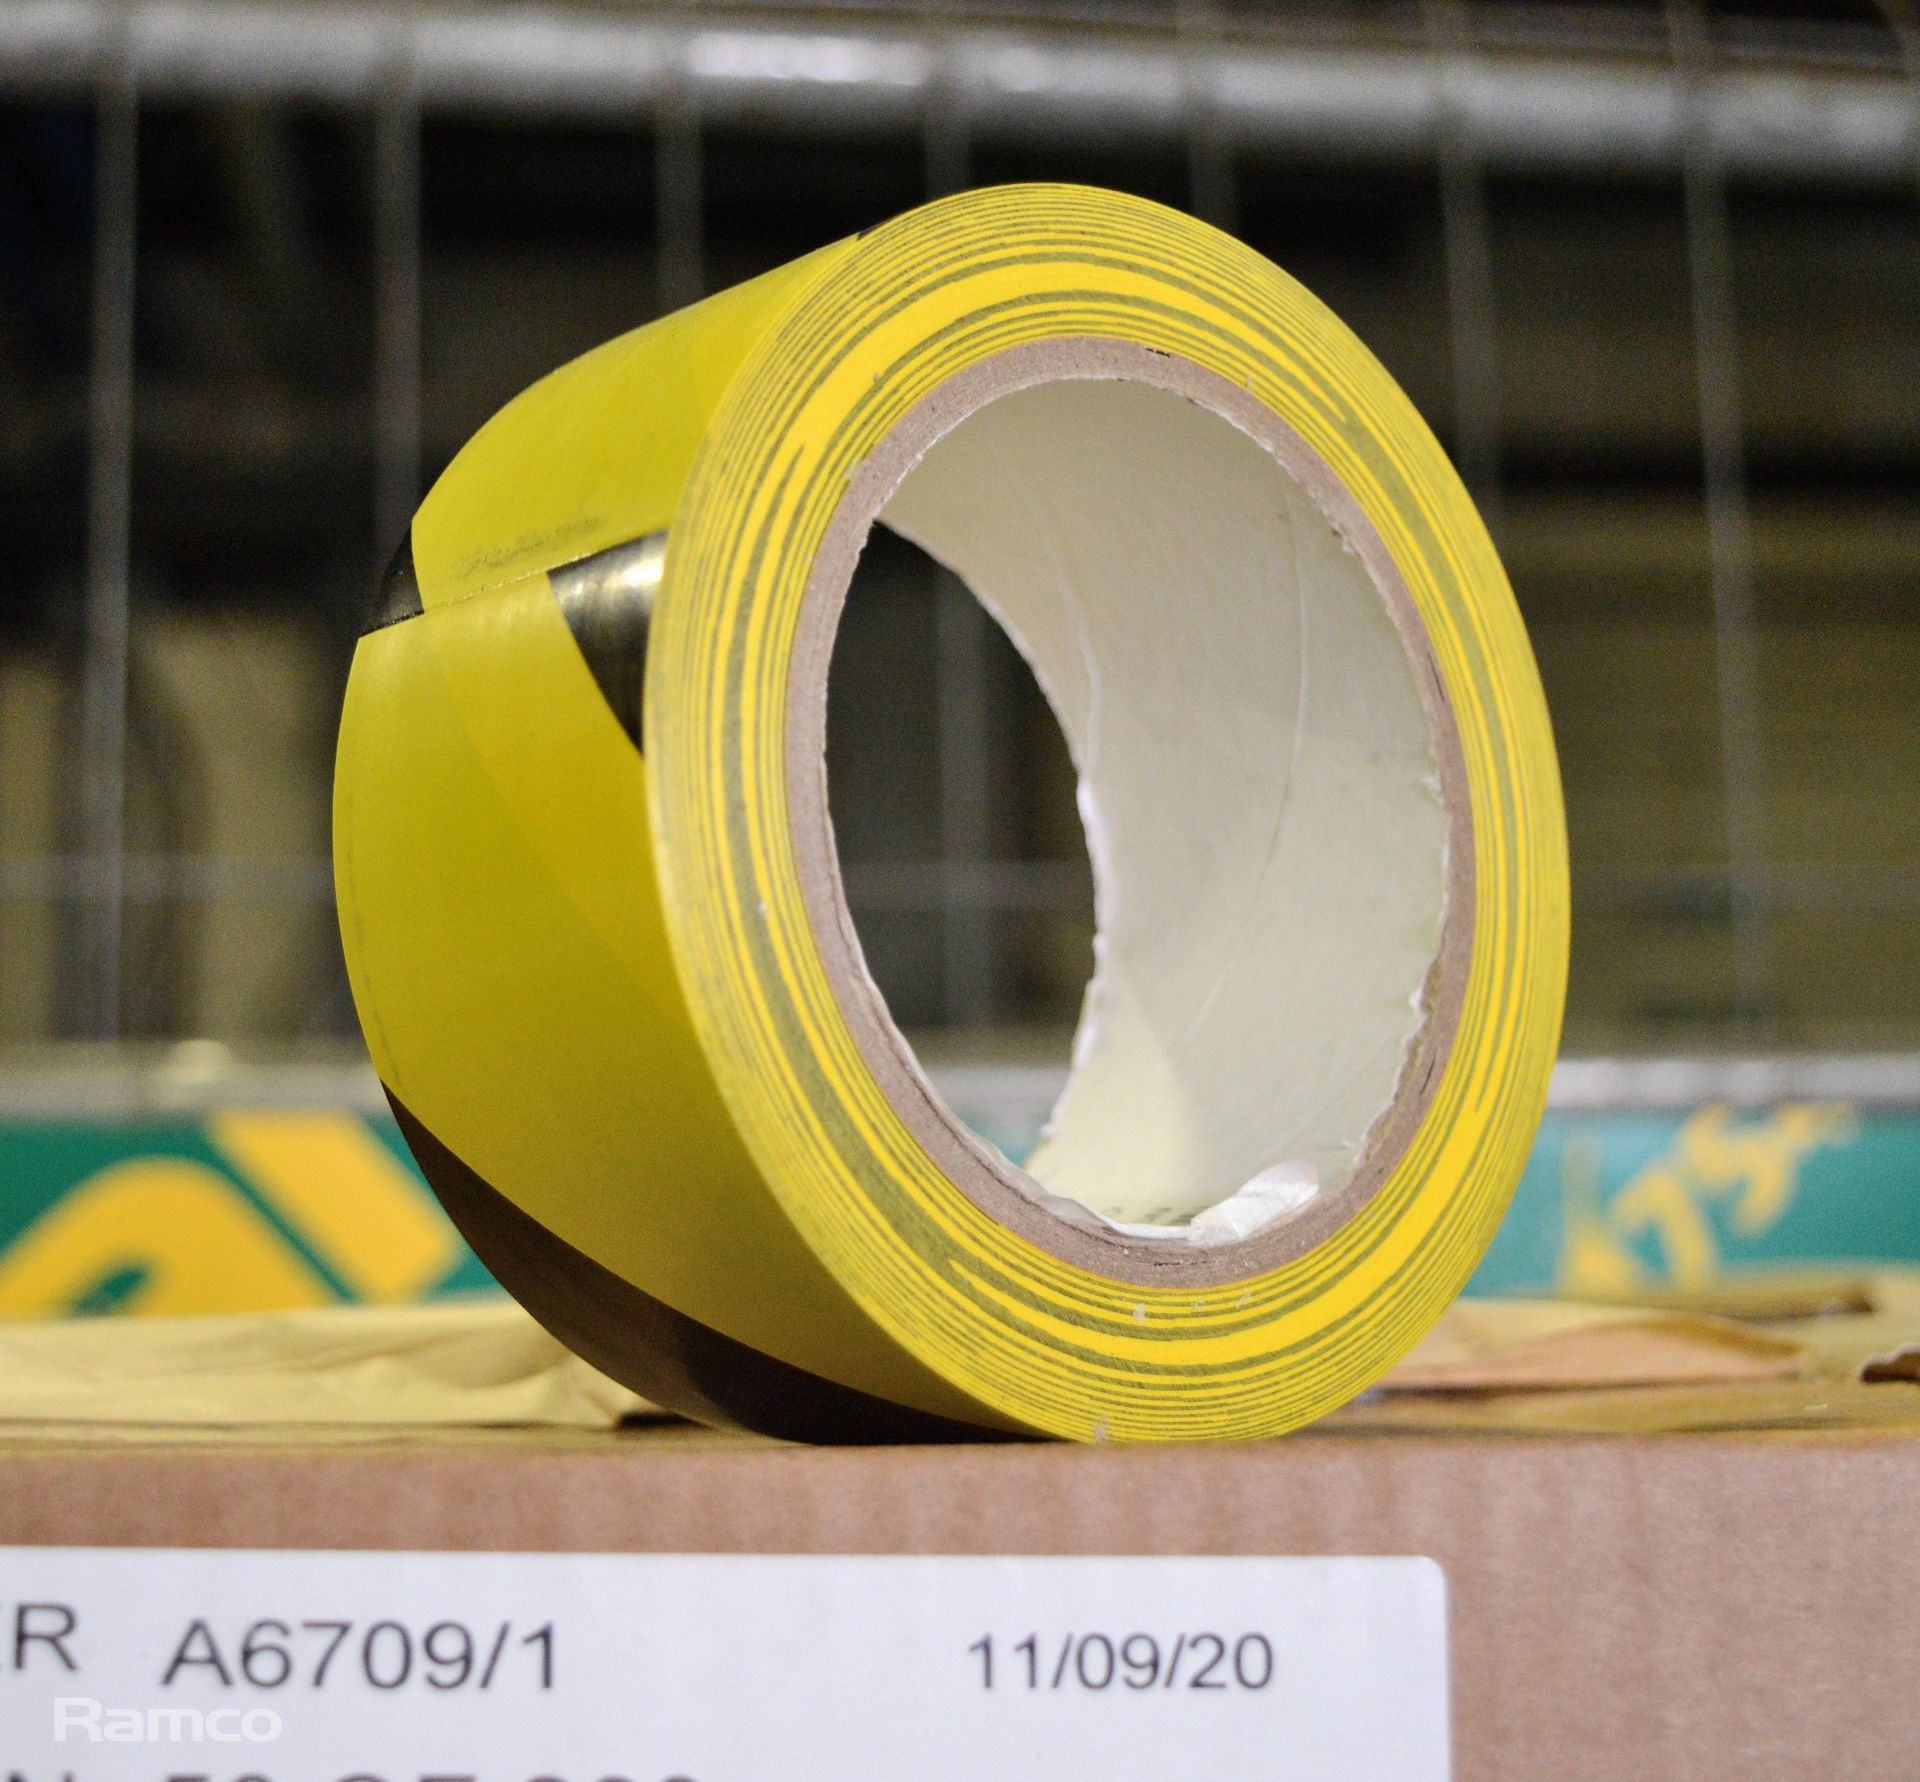 Anixter Black & Yellow Flagging Tape 50mm x 30m - 6 Rolls Per Box - 6 boxes - Image 3 of 4